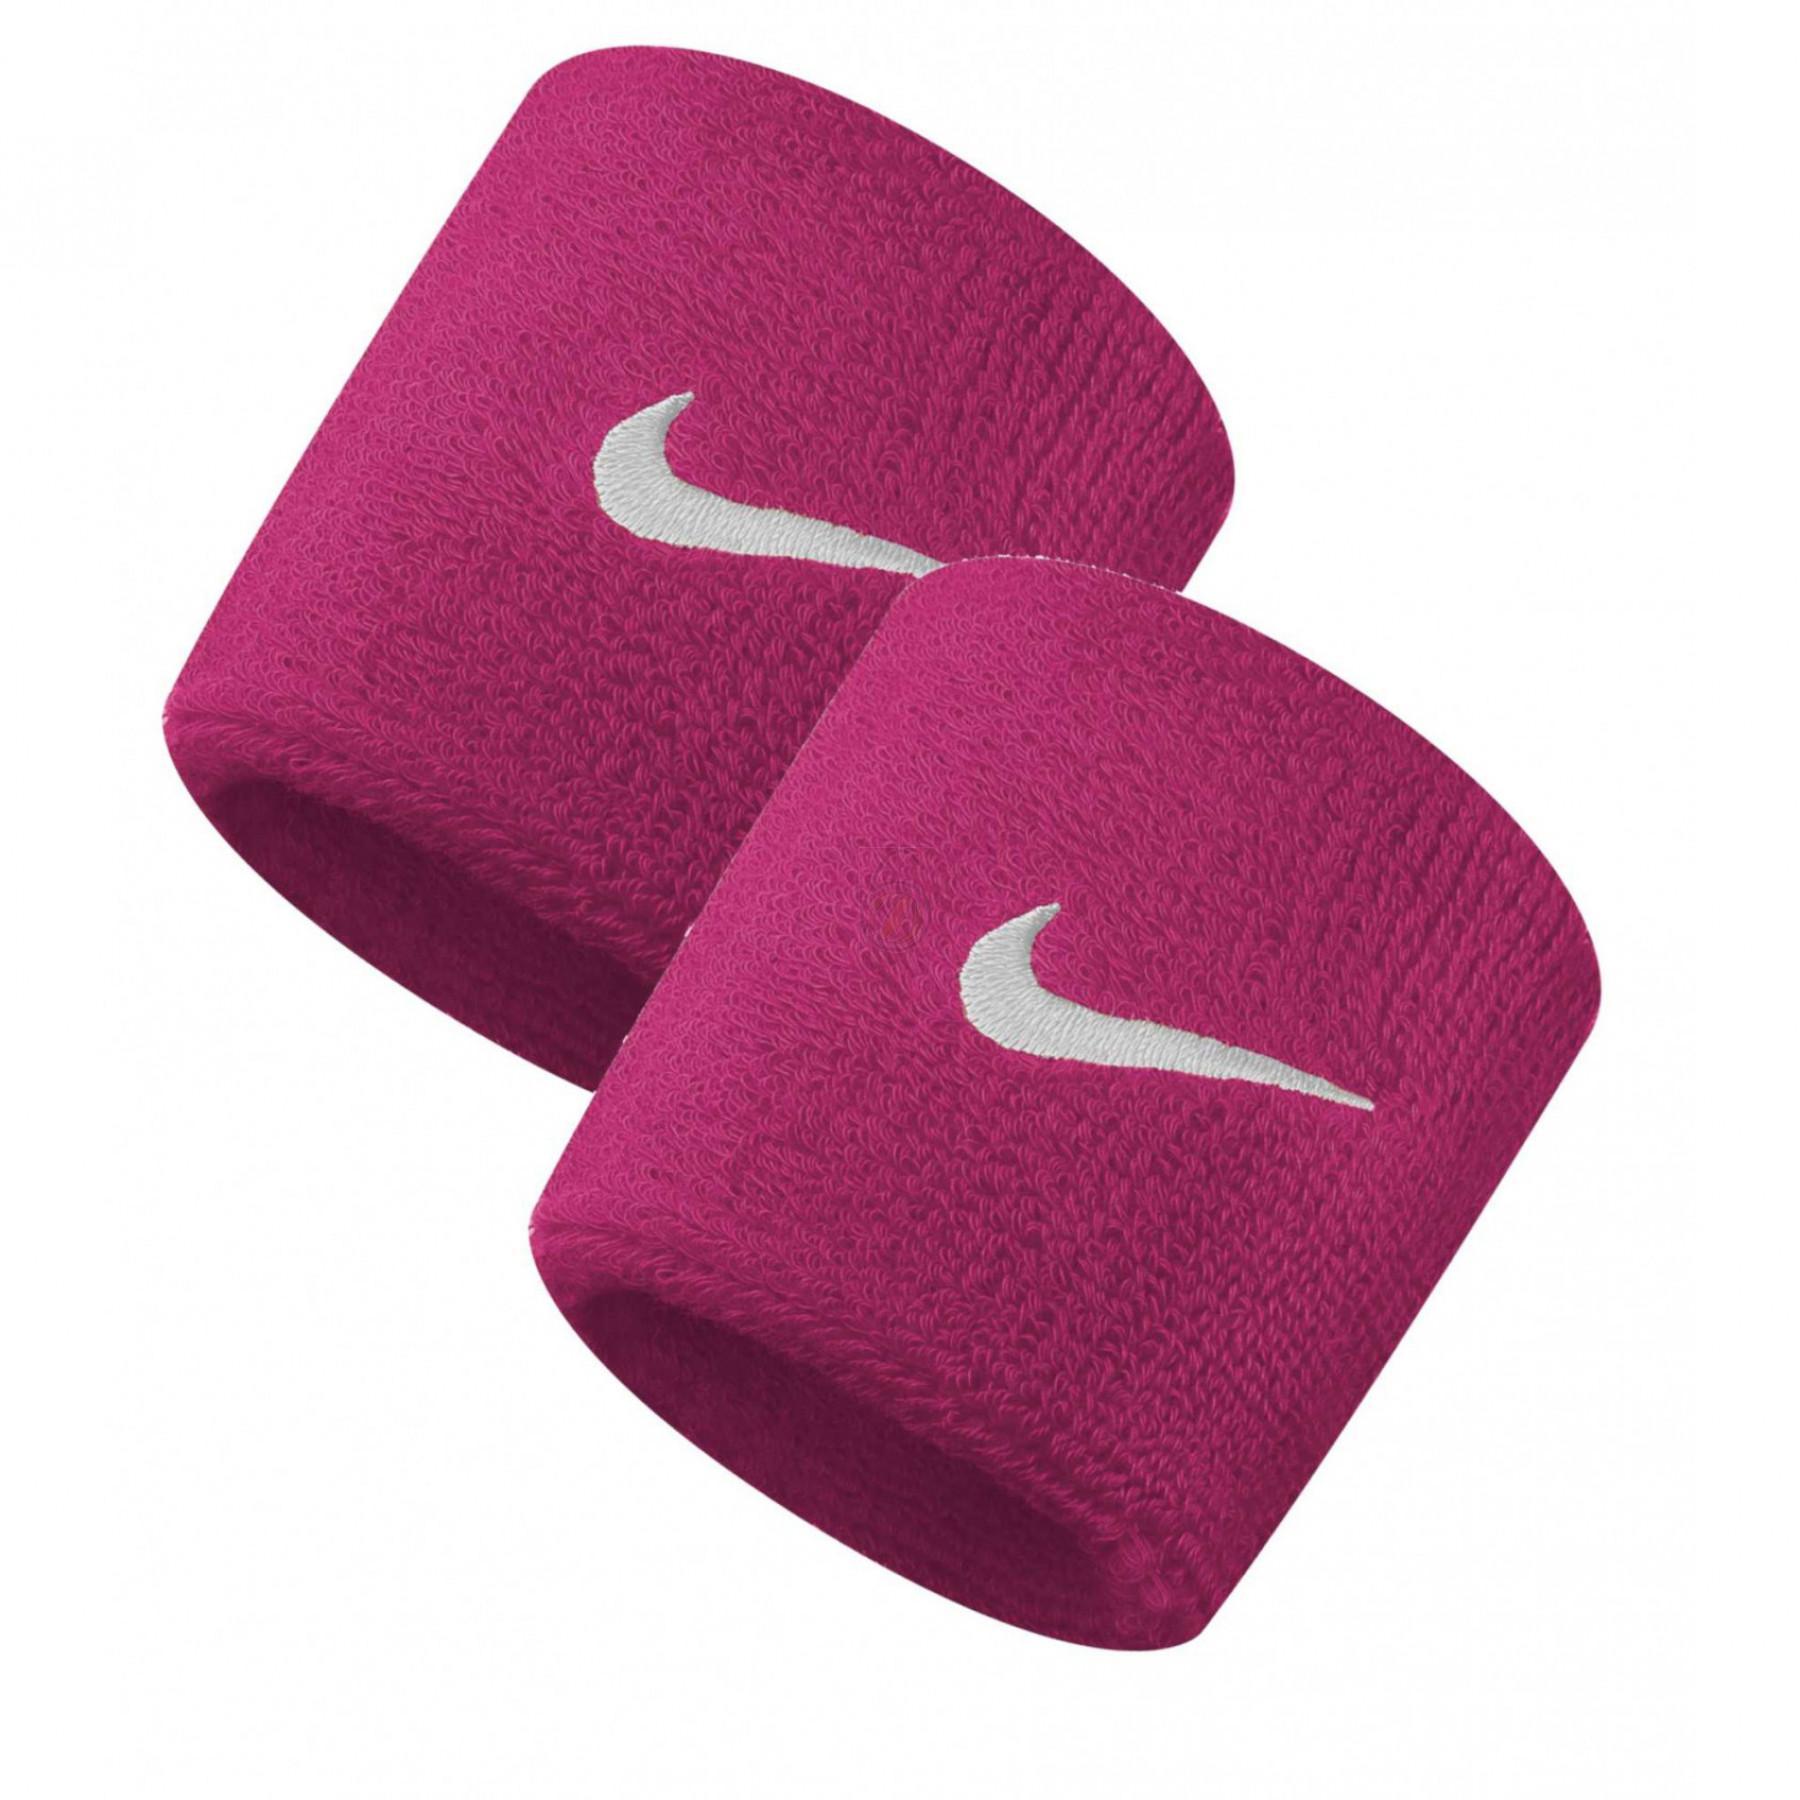 Sponge cuffs Nike swoosh